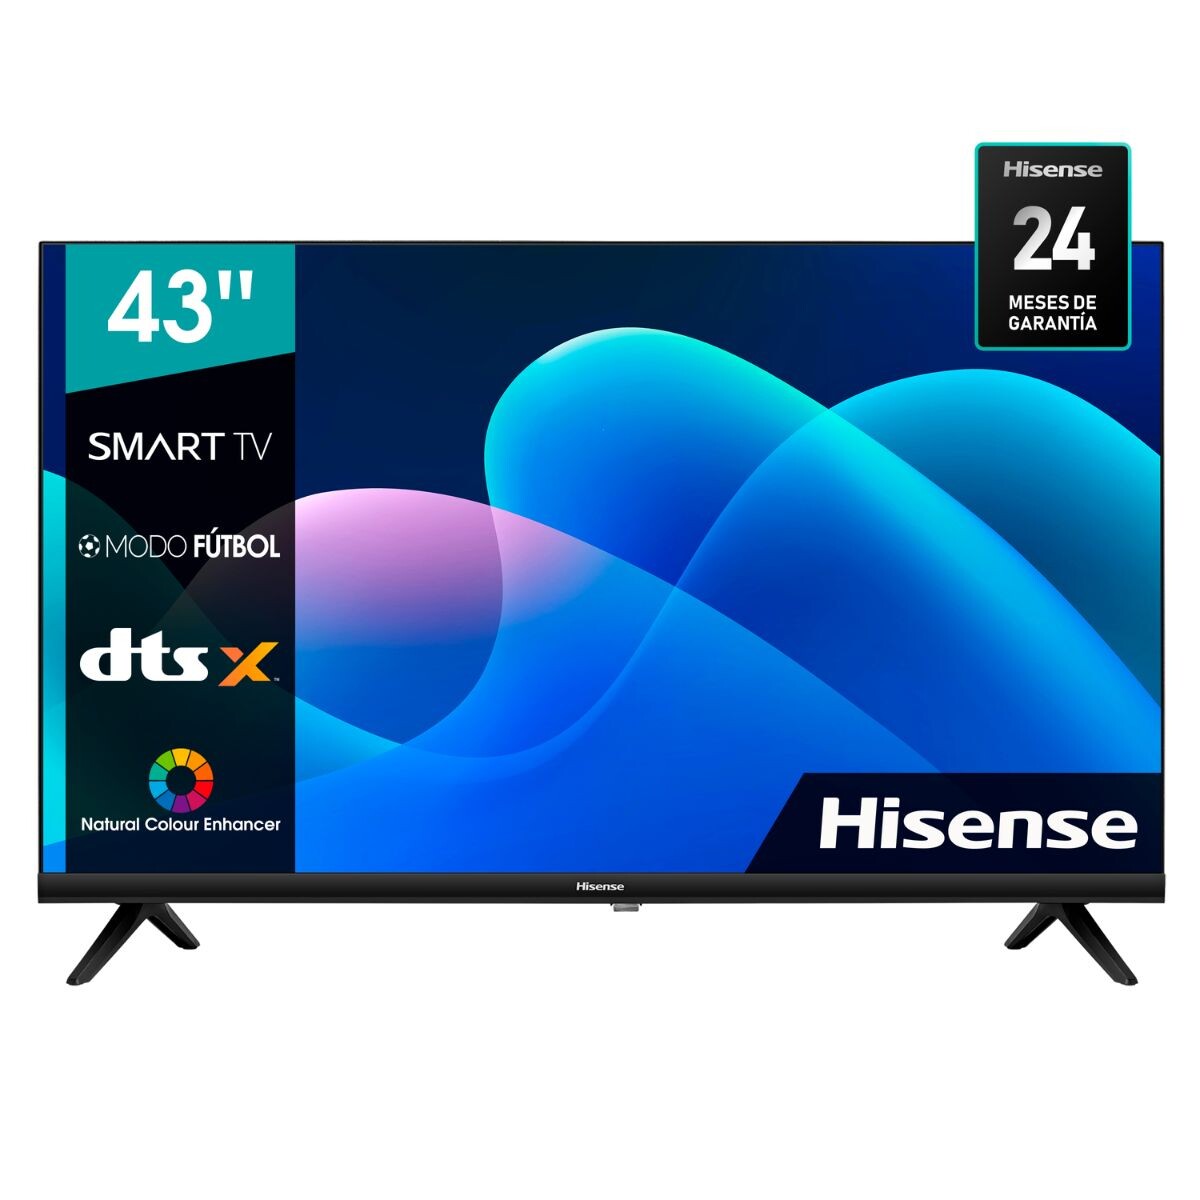 Hisense Smart TV 43 Full HD 